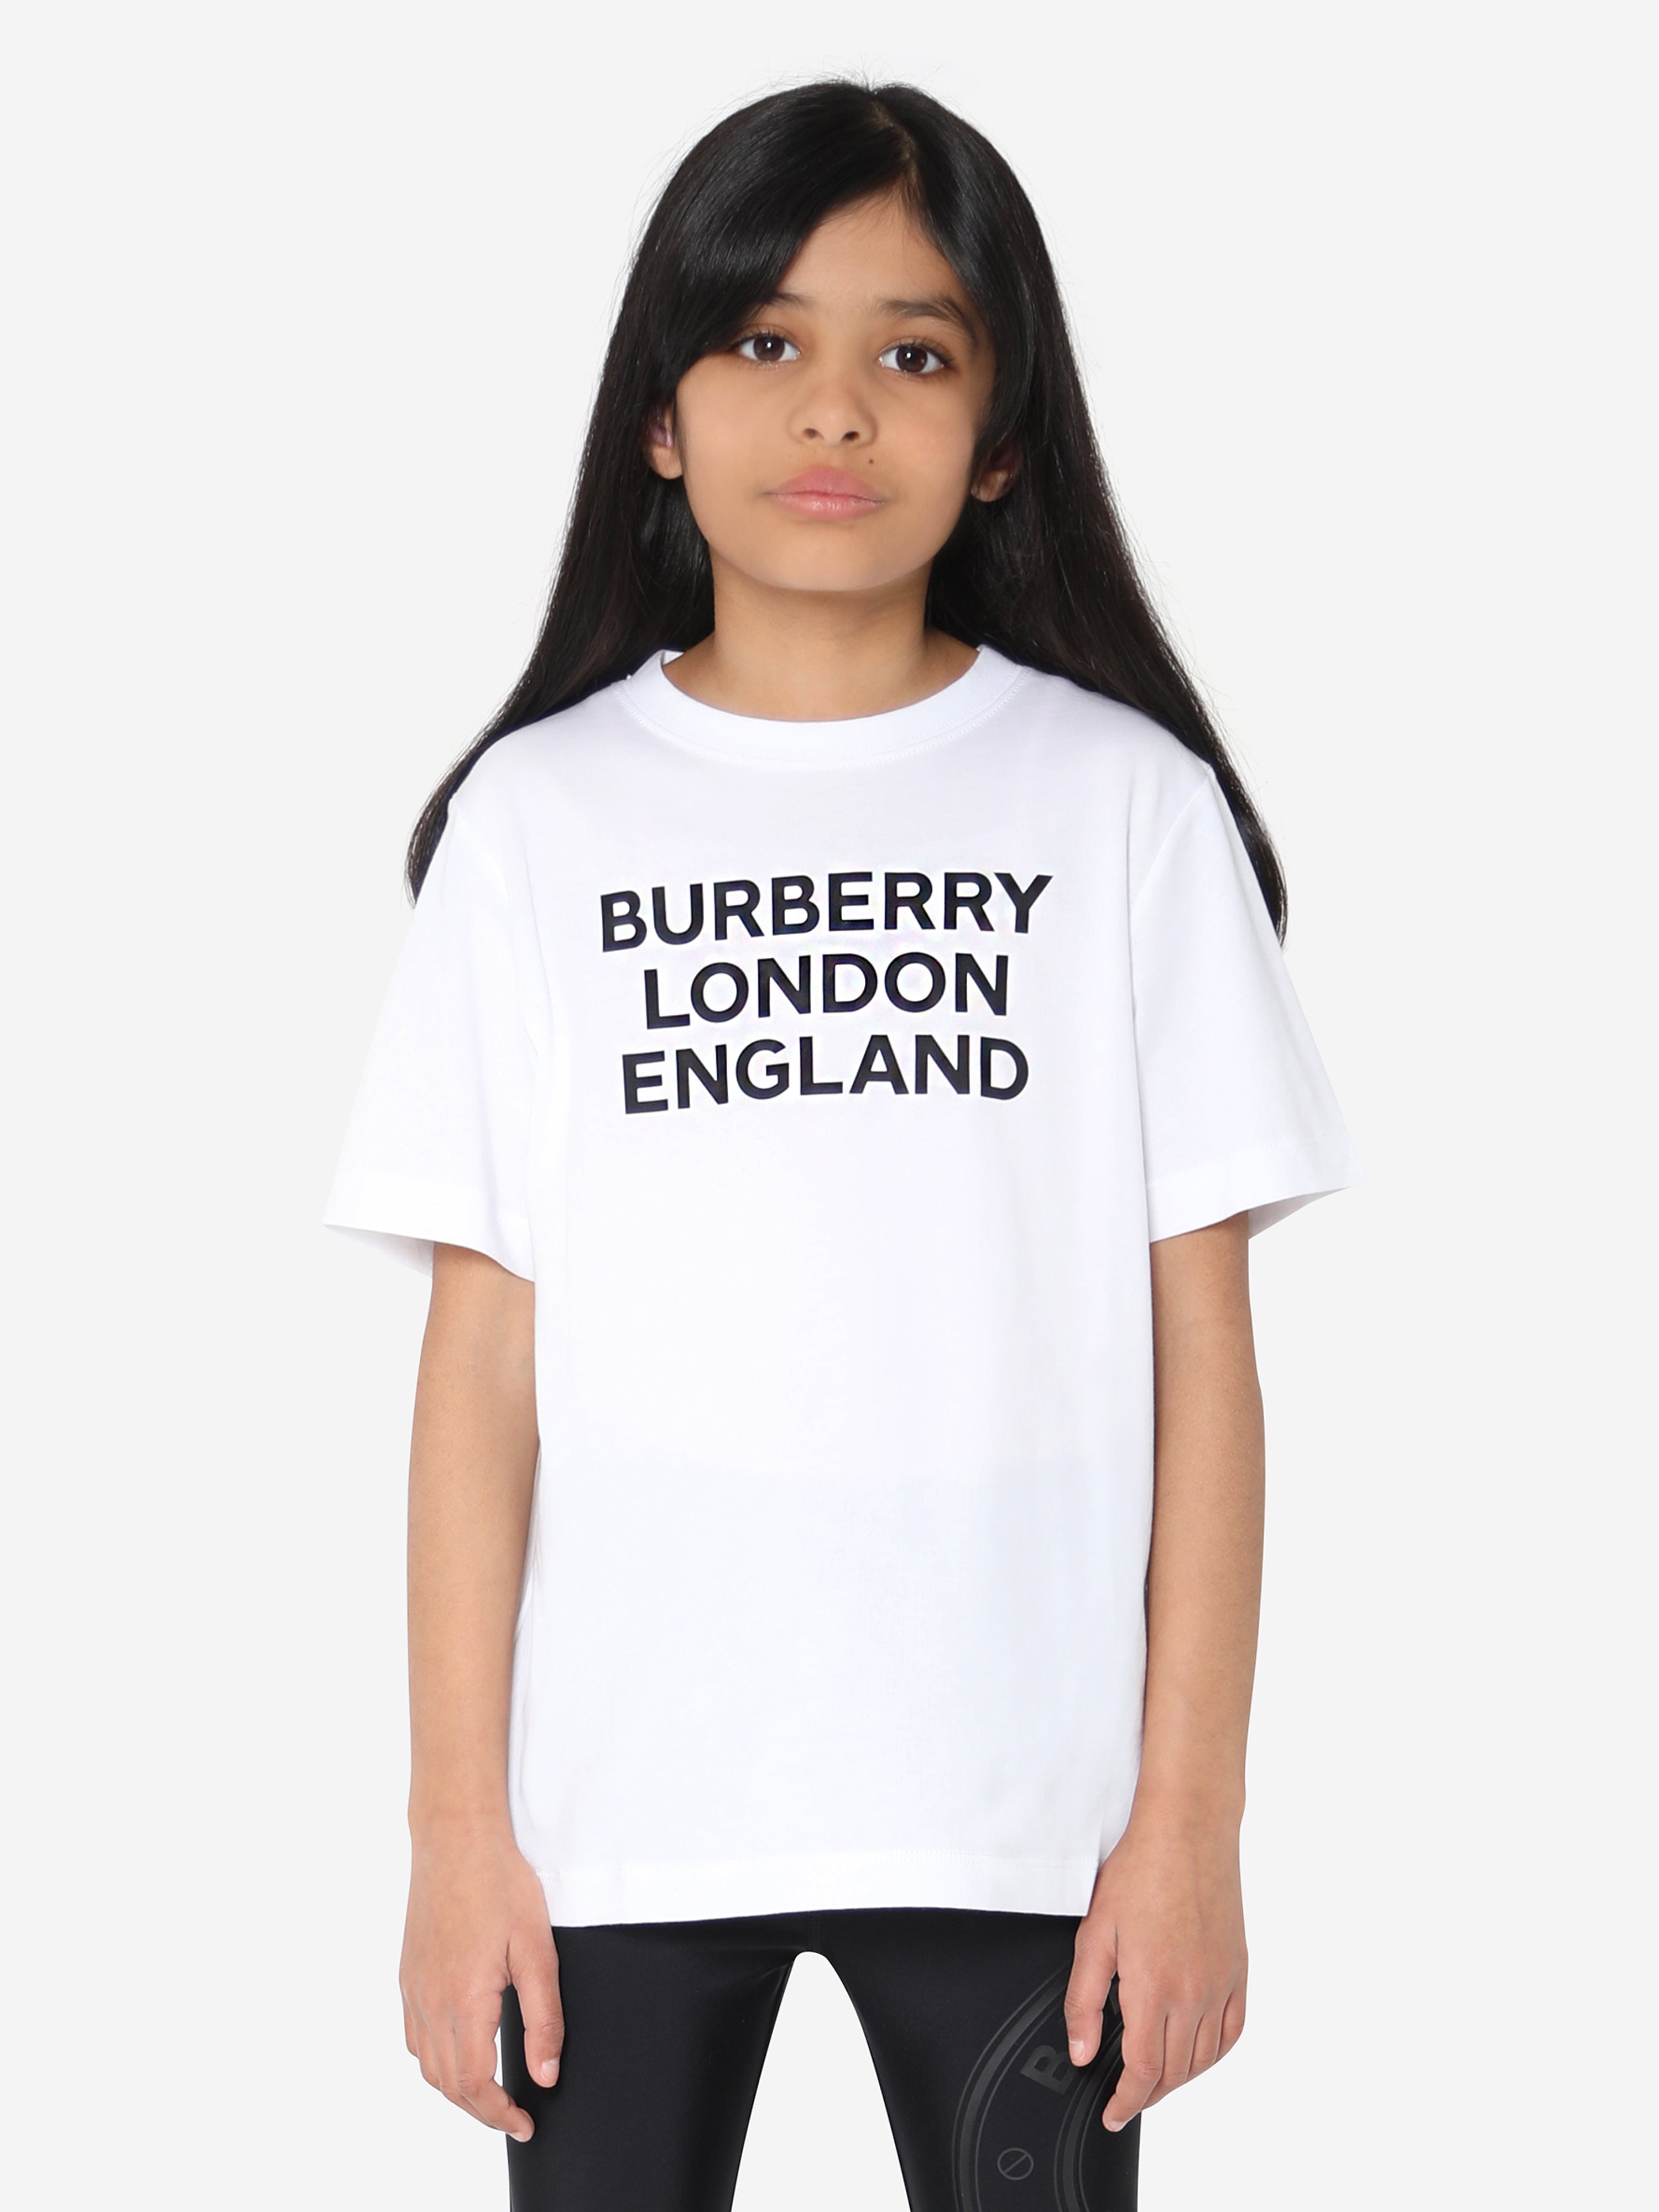 BURBERRY LONDON ENGLAND キッズ Tシャツ 10 140-